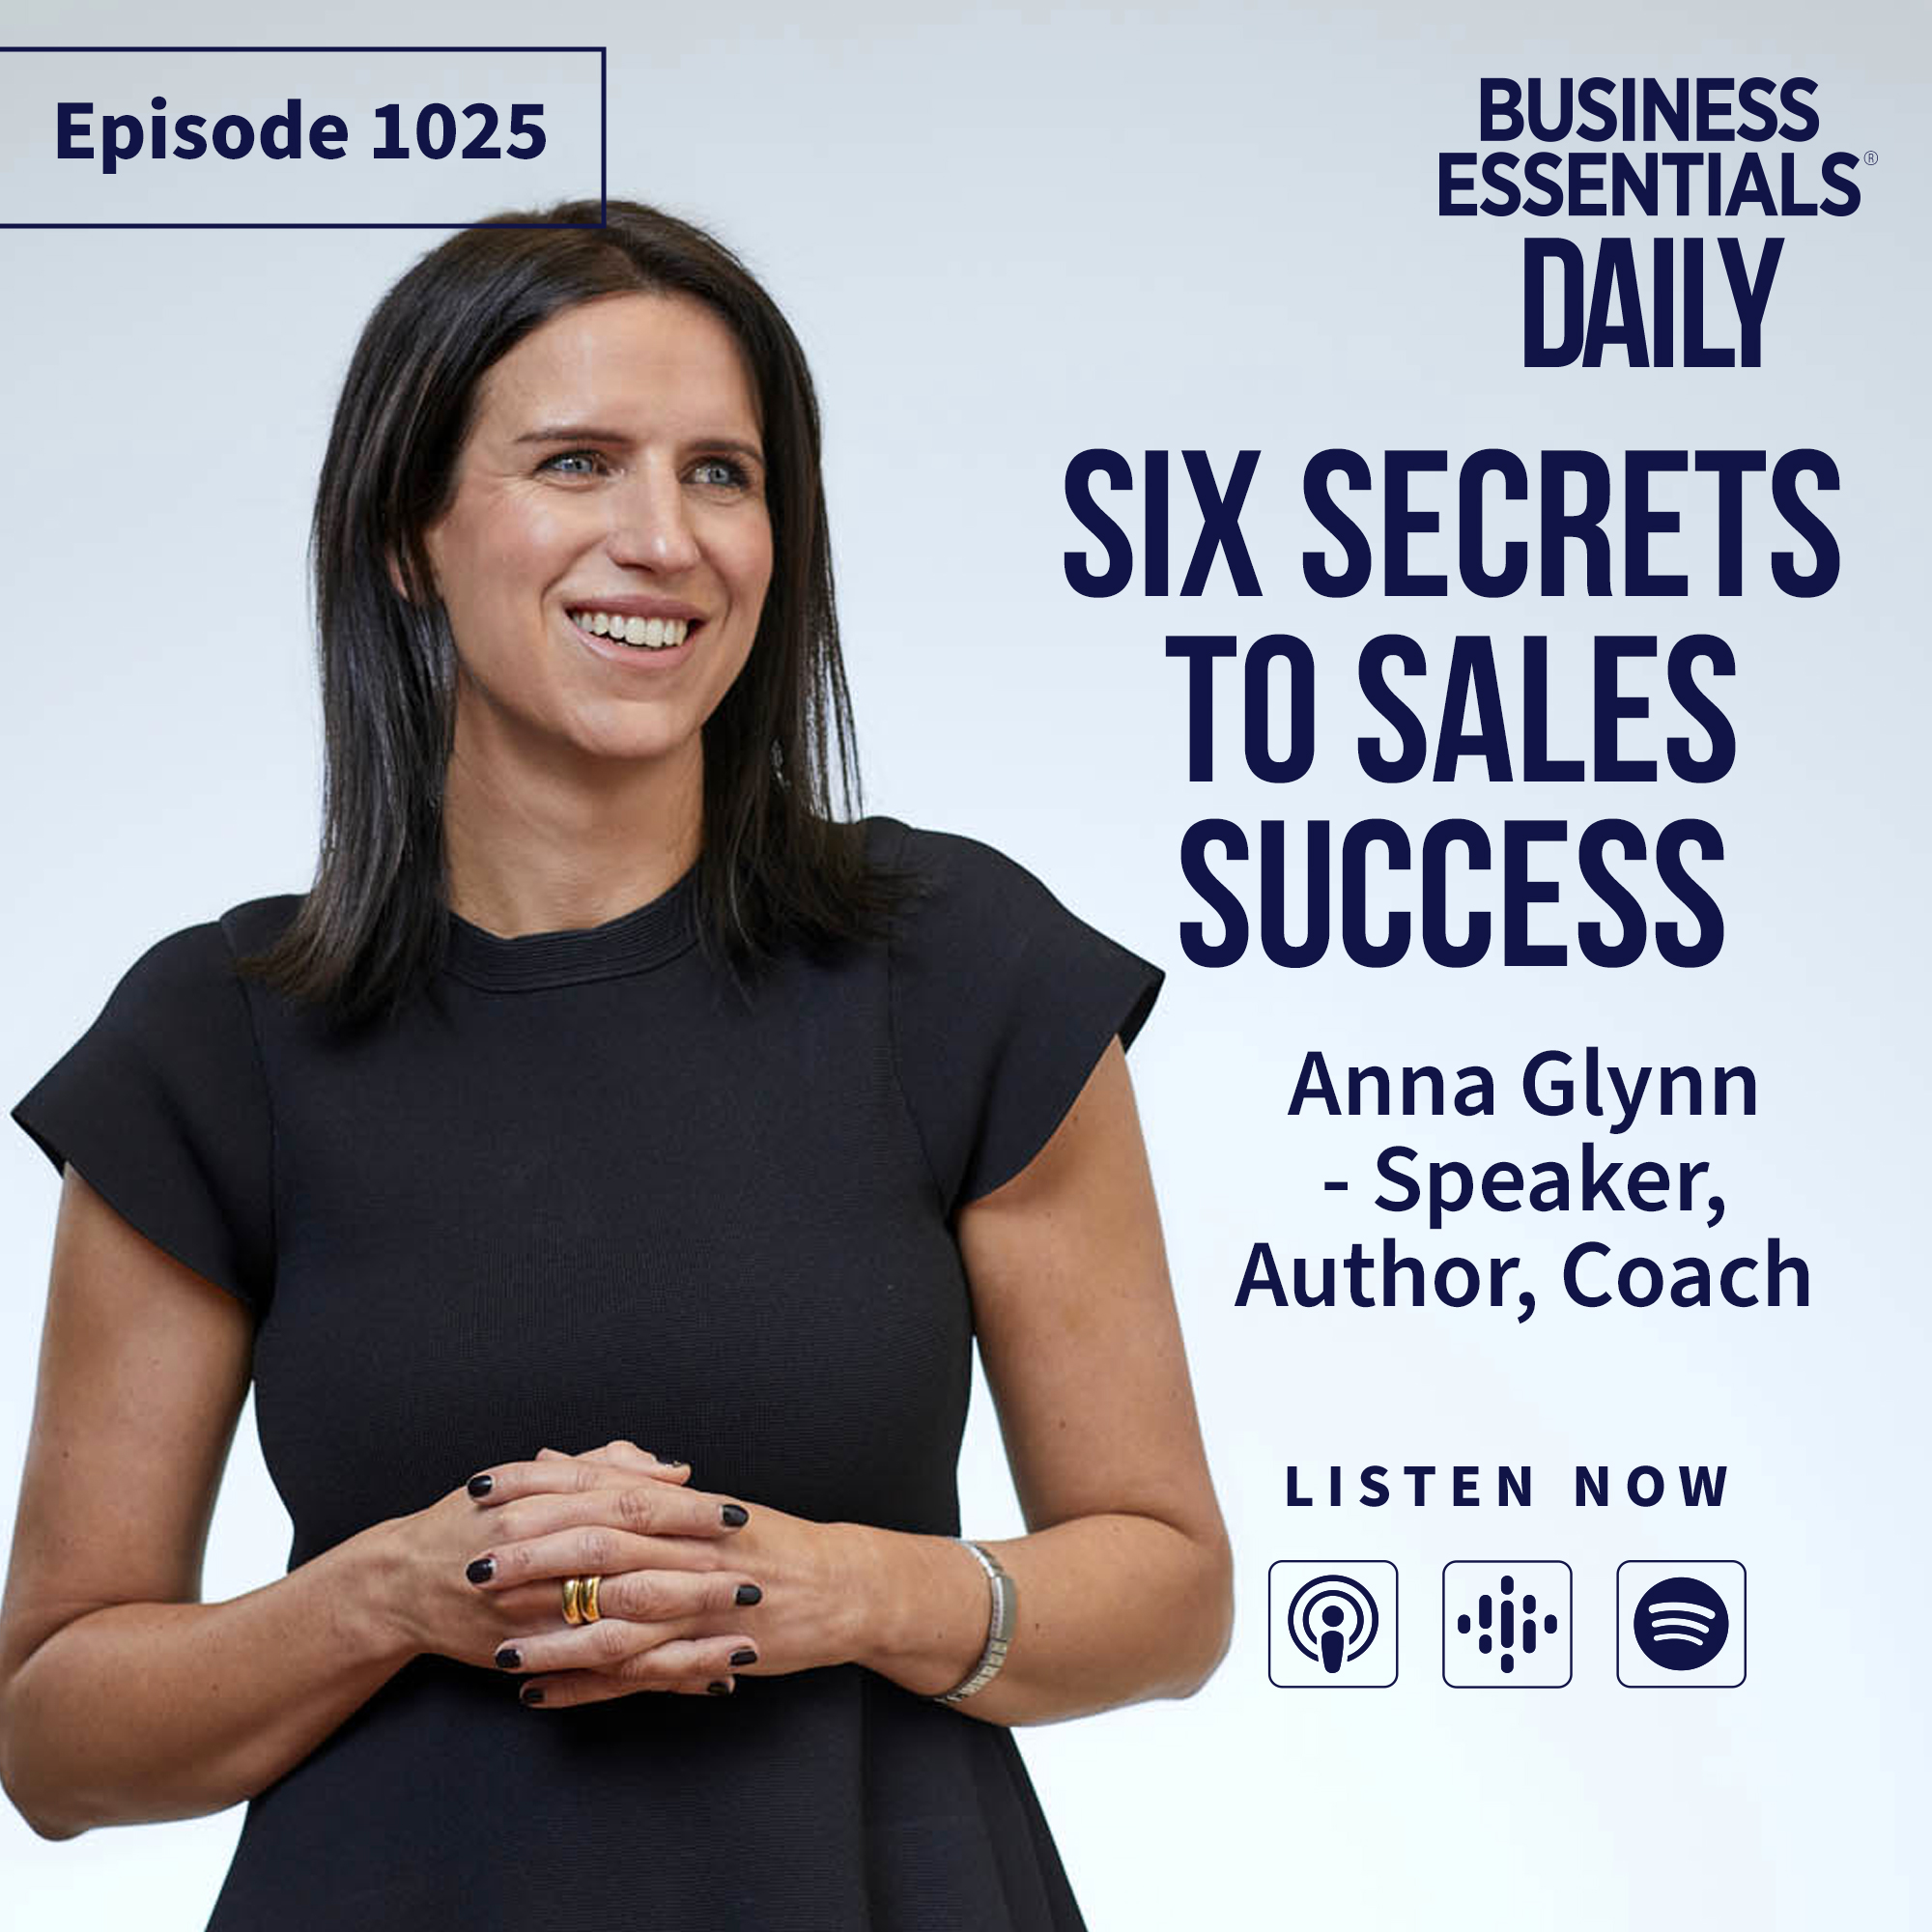 Six secrets to sales success